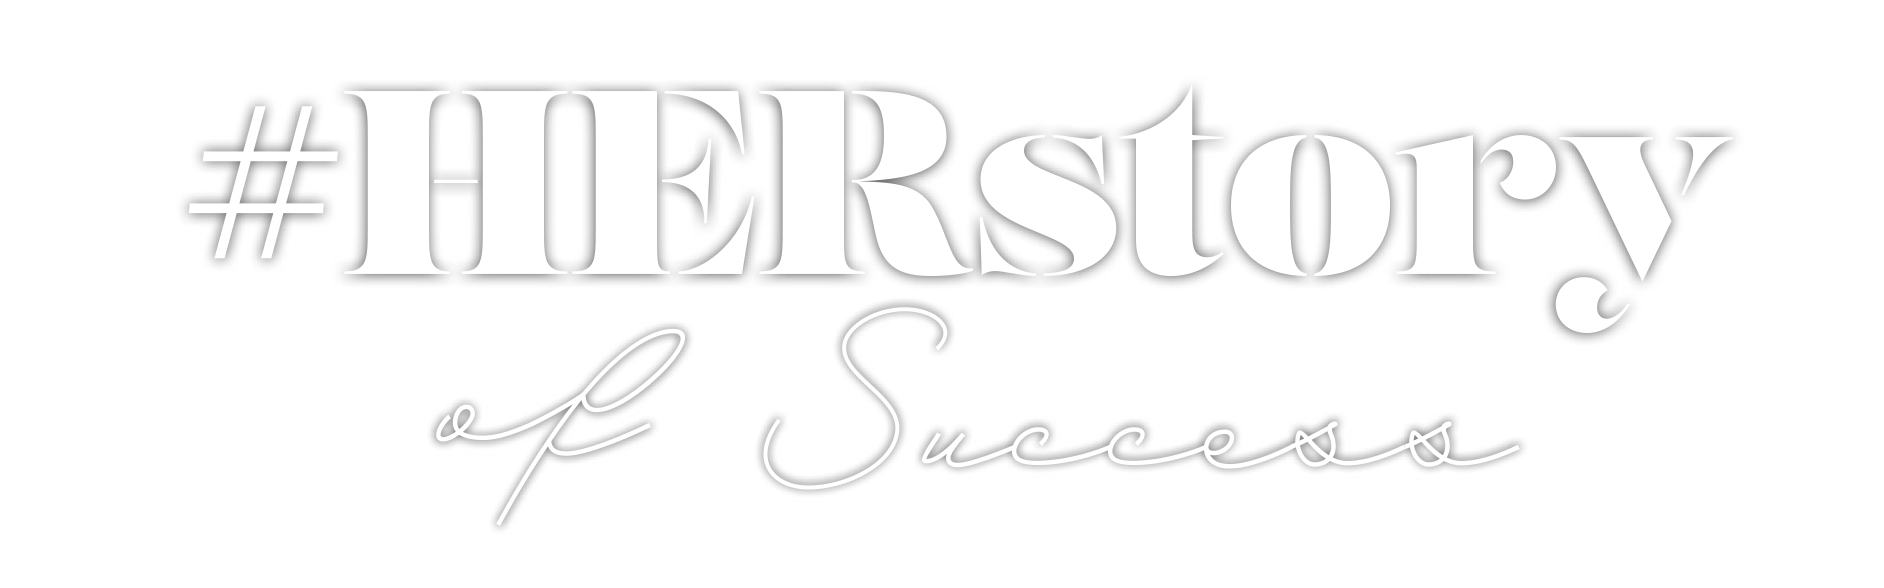 HERstory-of-Success-header-text